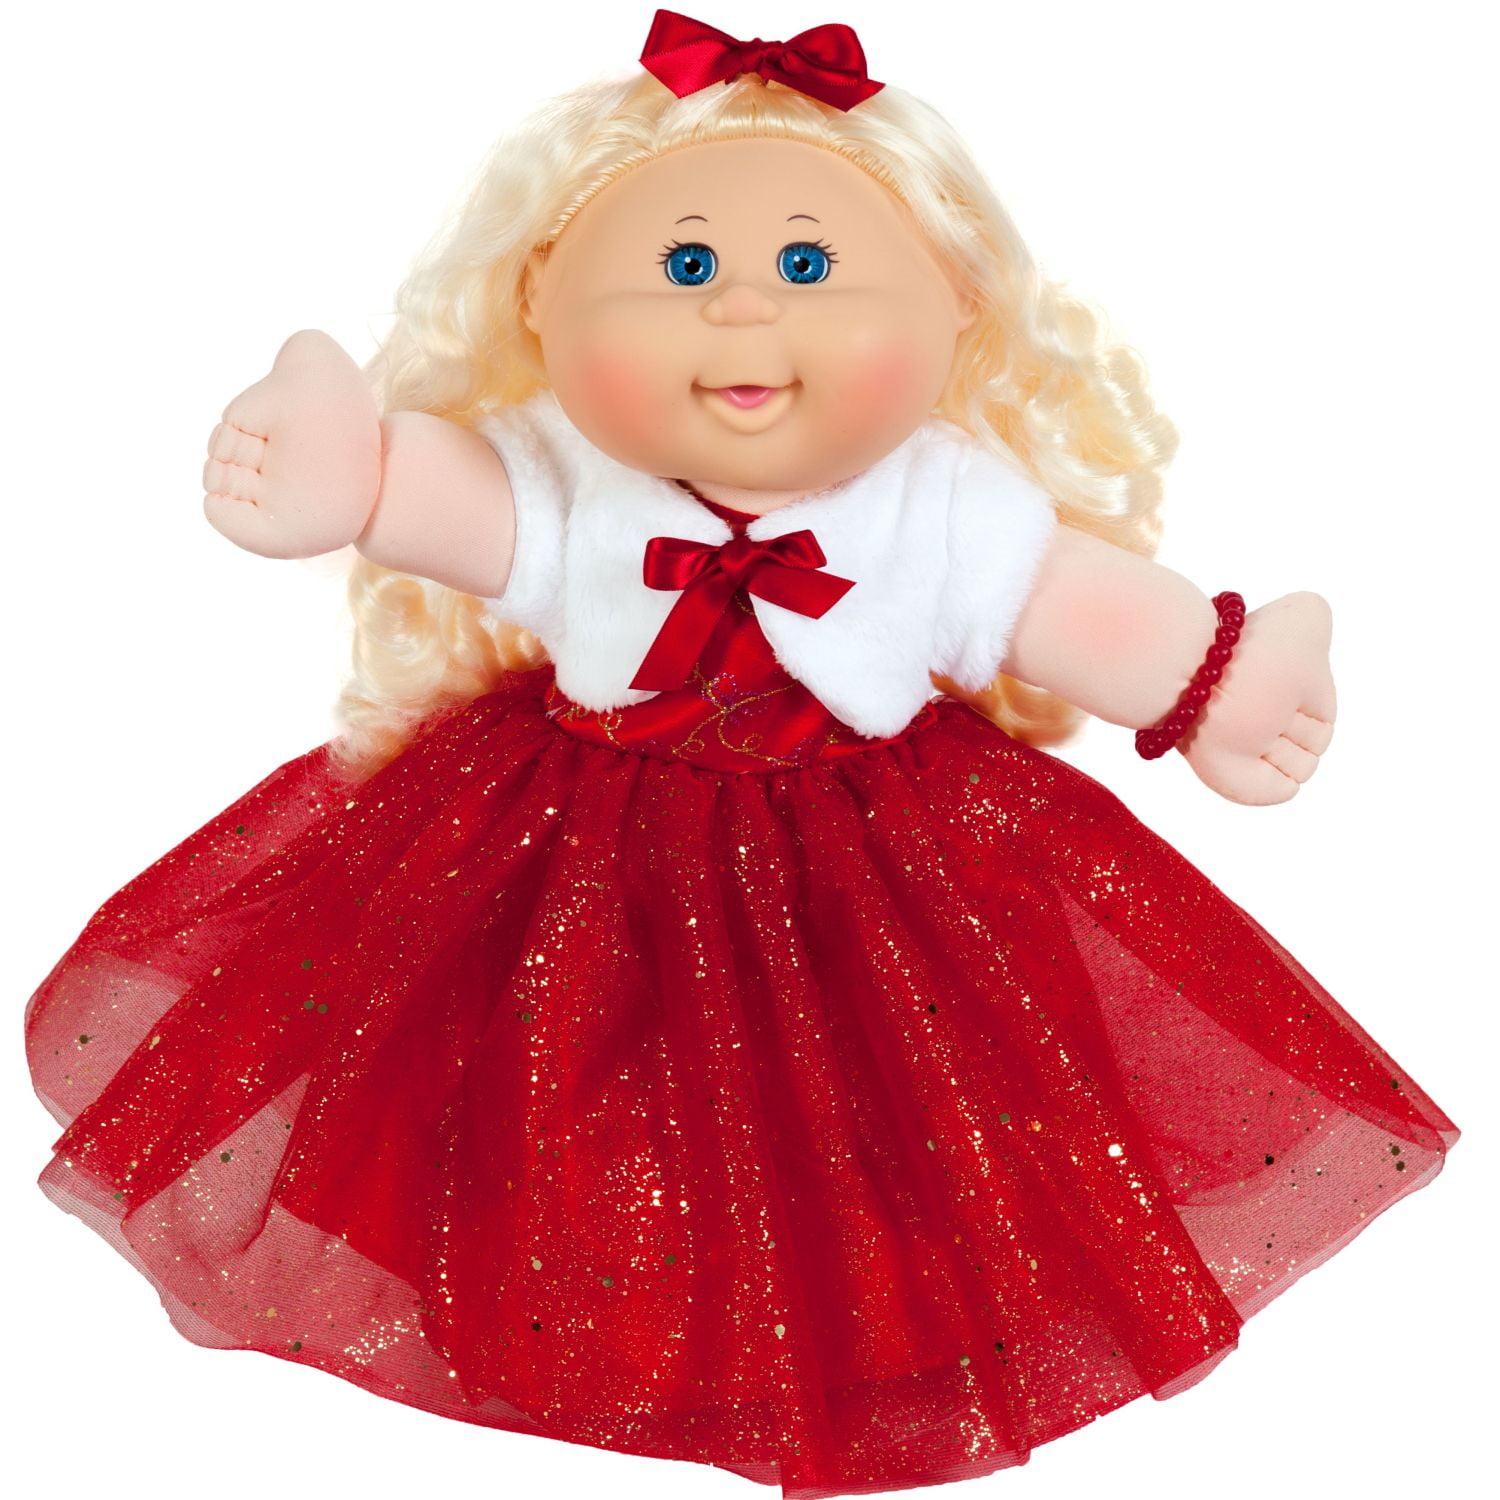 2016 Cabbage Patch Kids Holiday Edition Doll Blonde Hair Blue Eyes Red Dress Walmart Com Walmart Com,Potato Bread